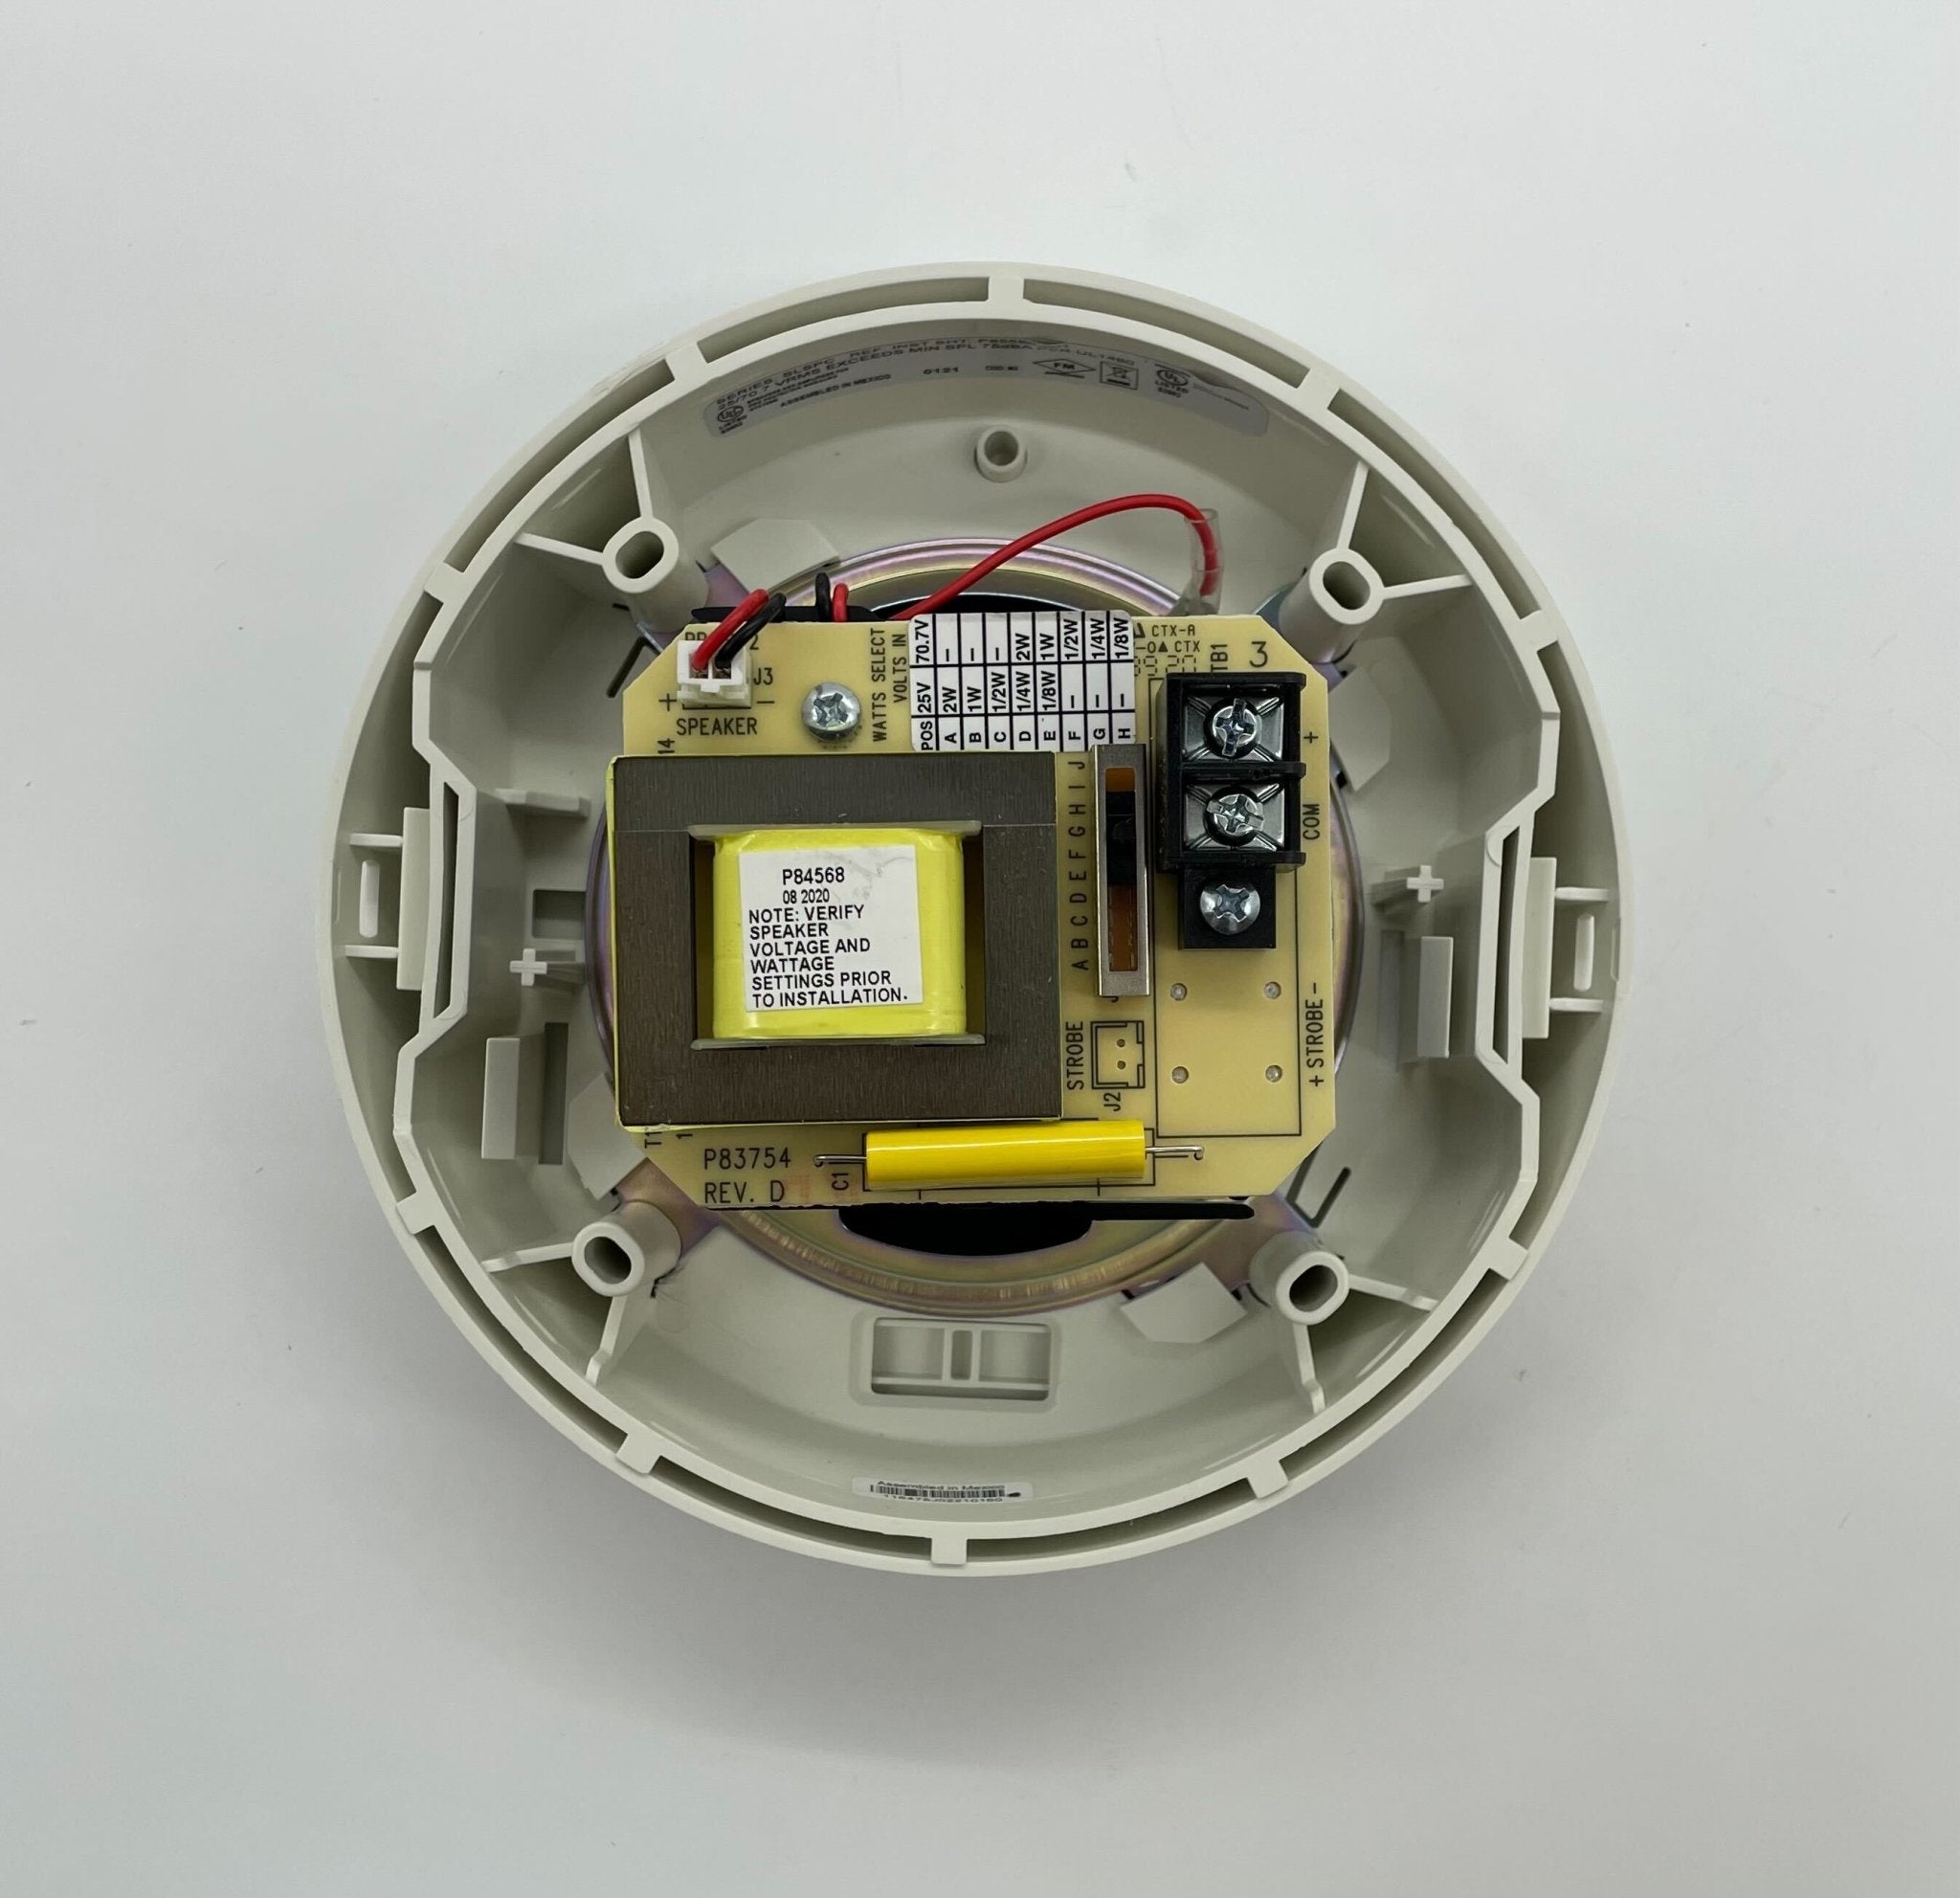 Siemens SLSPCW-N - The Fire Alarm Supplier